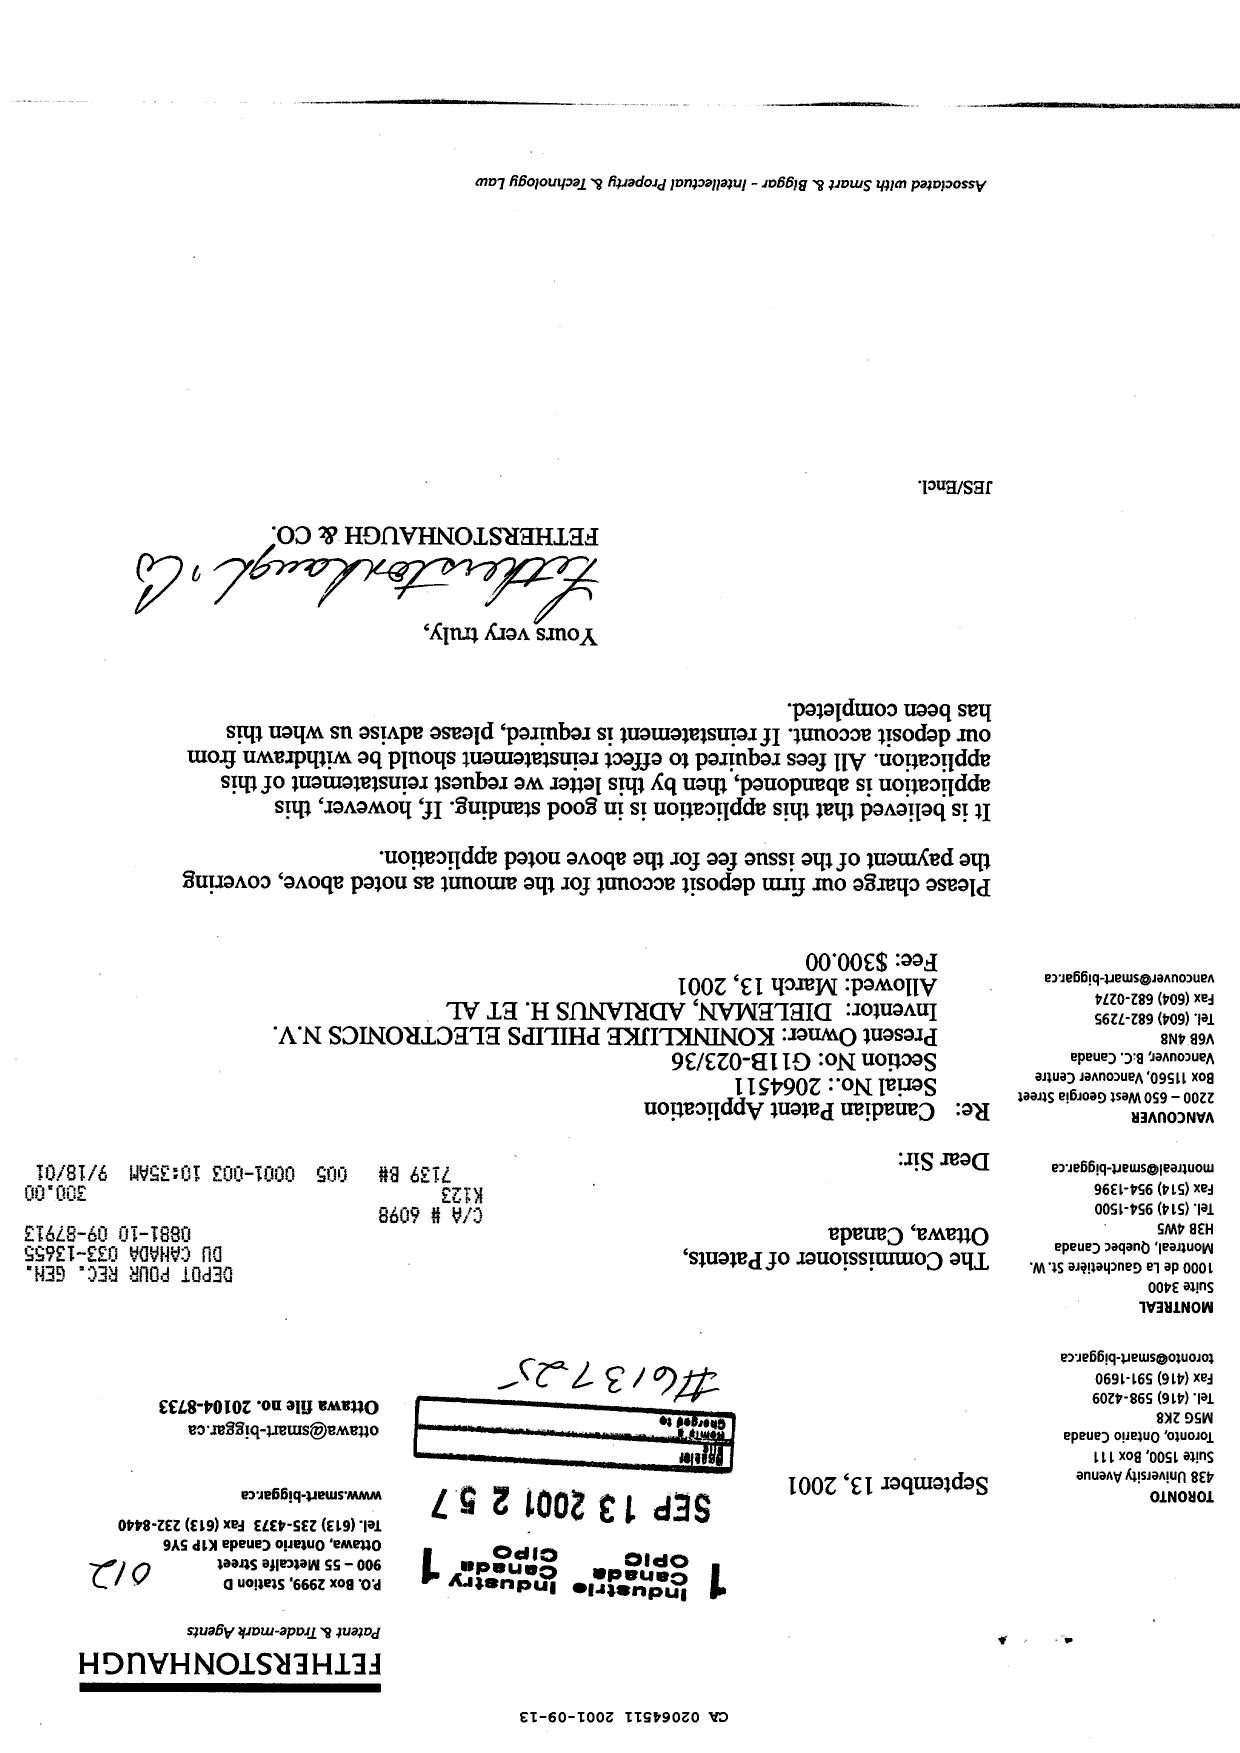 Canadian Patent Document 2064511. Correspondence 20001213. Image 1 of 1